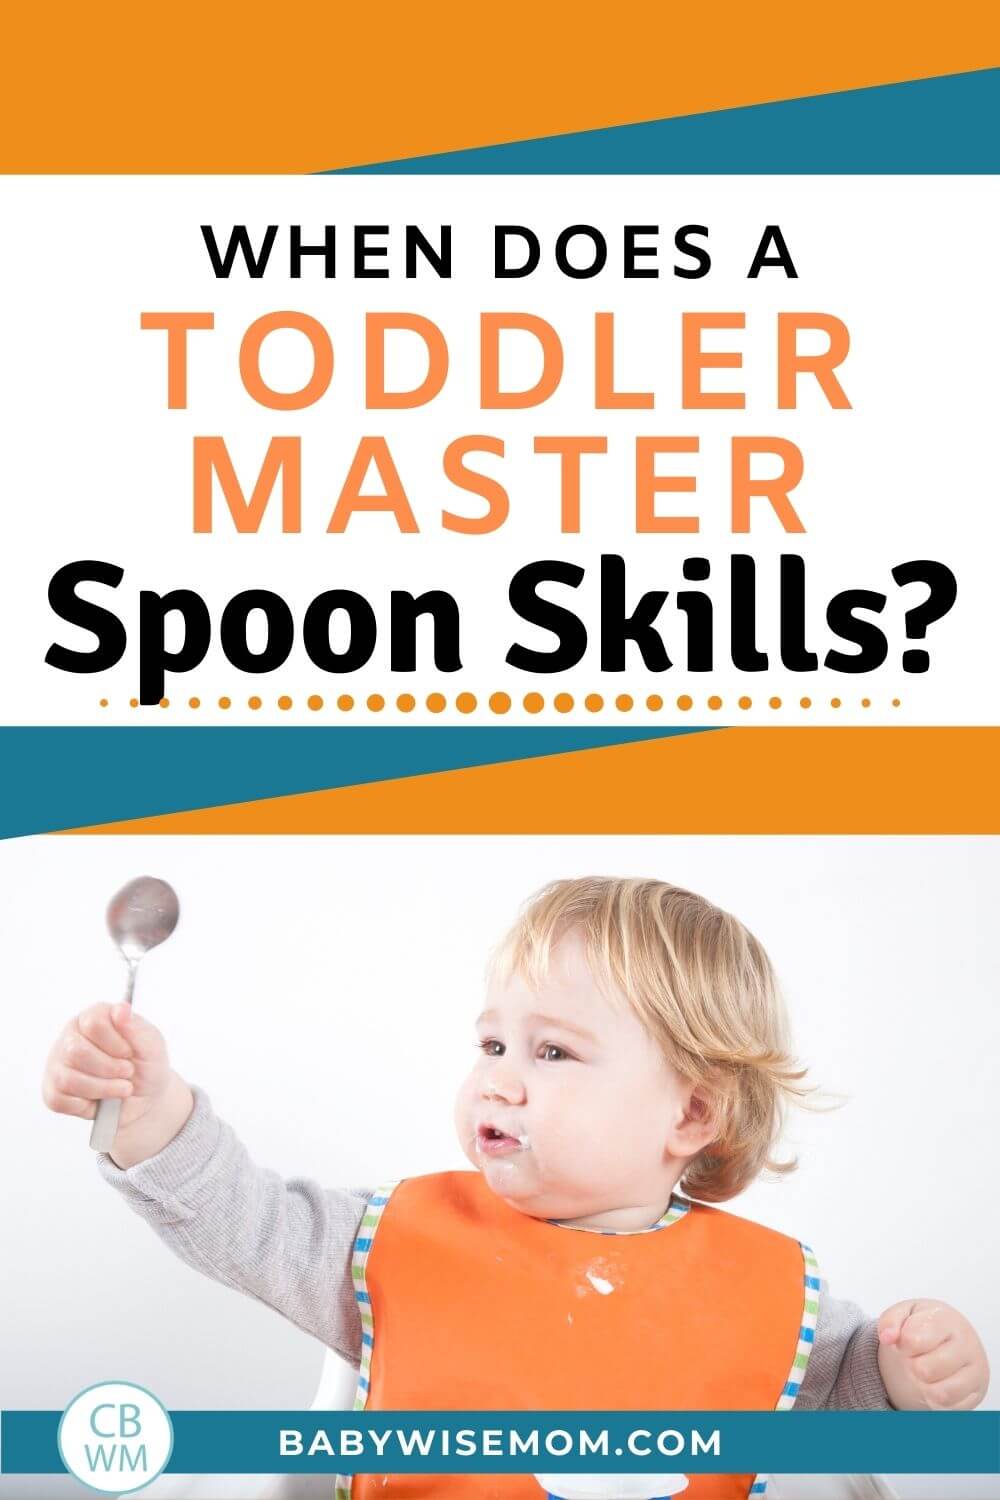 https://www.babywisemom.com/wp-content/uploads/2008/05/toddler-master-spoon-skills.jpg